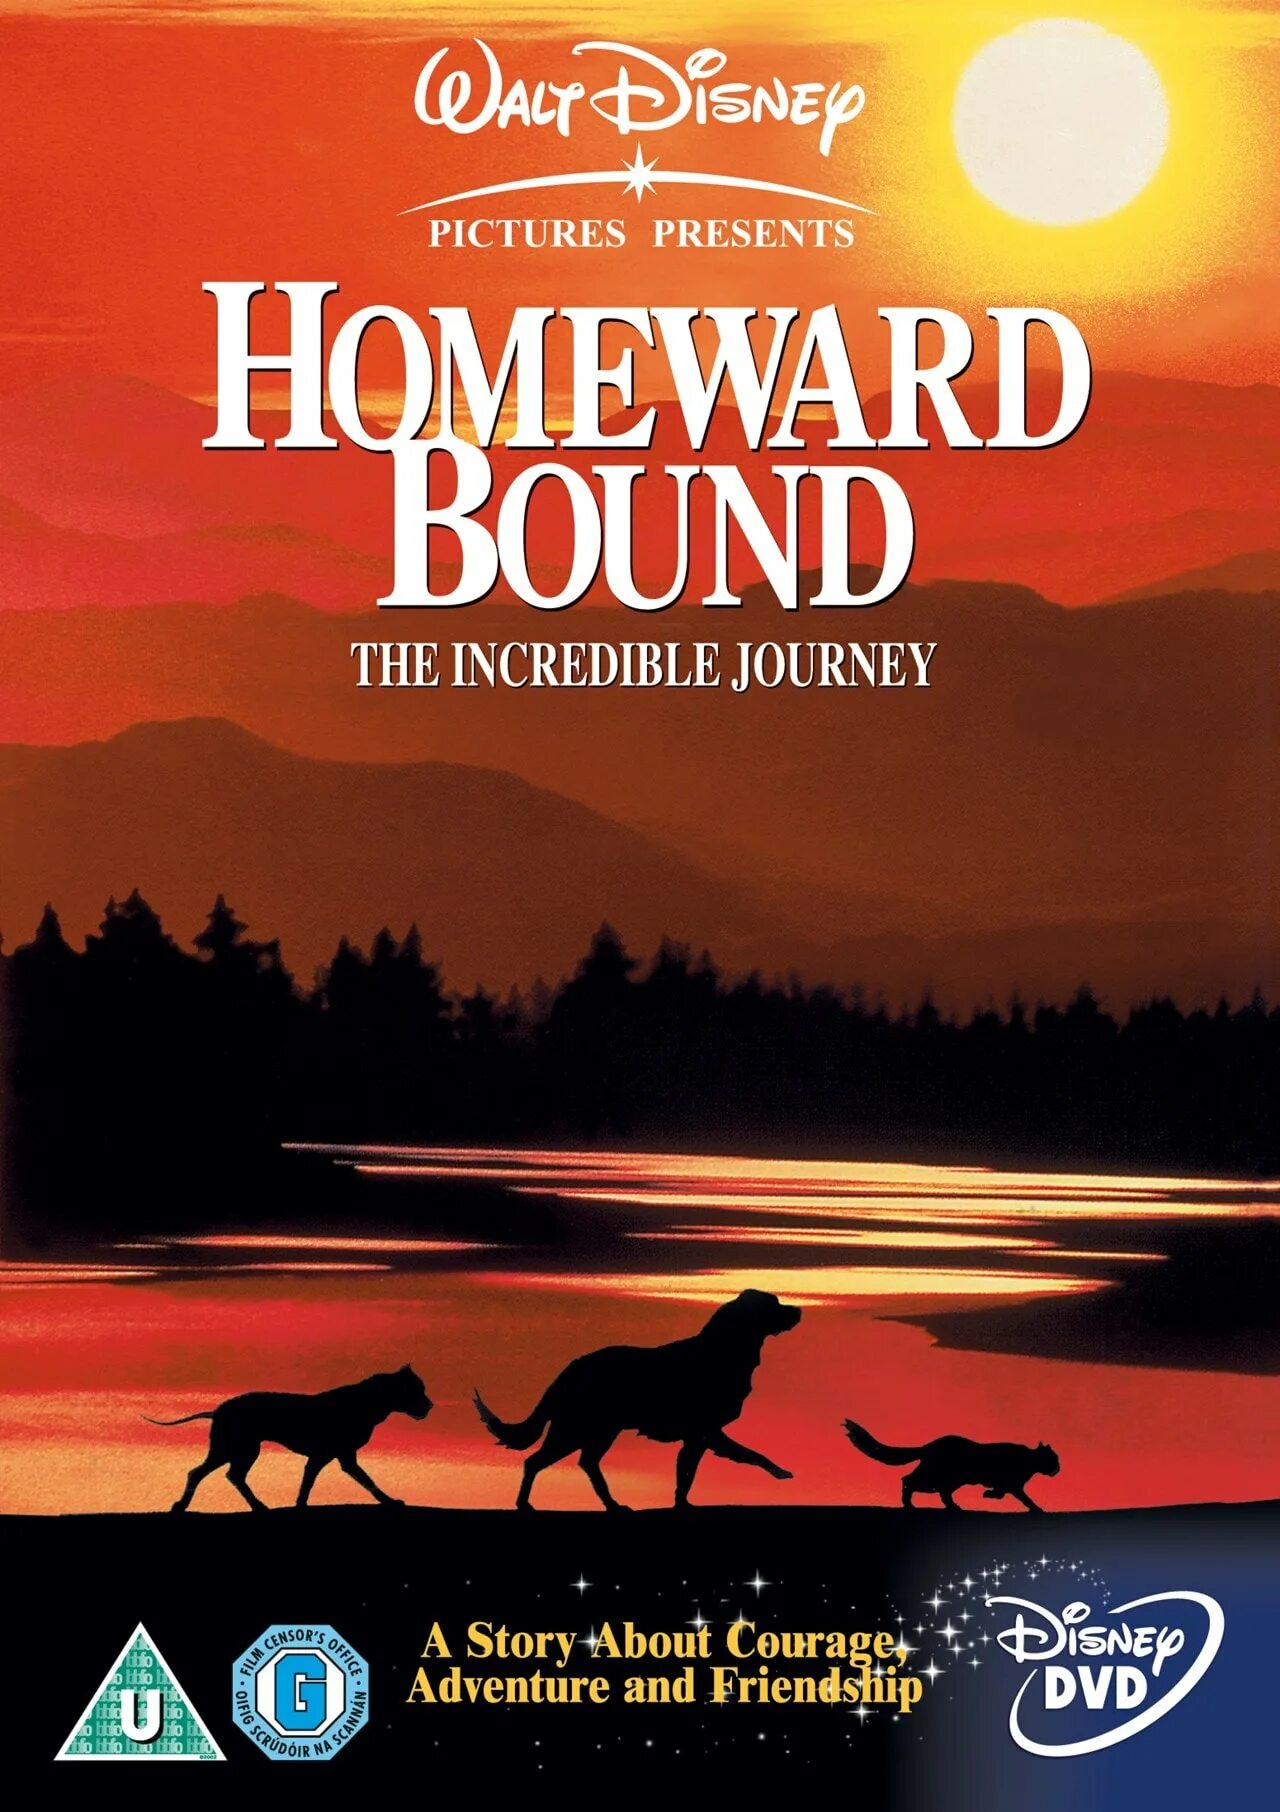 Homeward journey. Homeward bound: the incredible Journey. Дорога домой невероятное путешествие 1993. Homeward bound II: Lost in San Francisco. Значок Homeward bound.